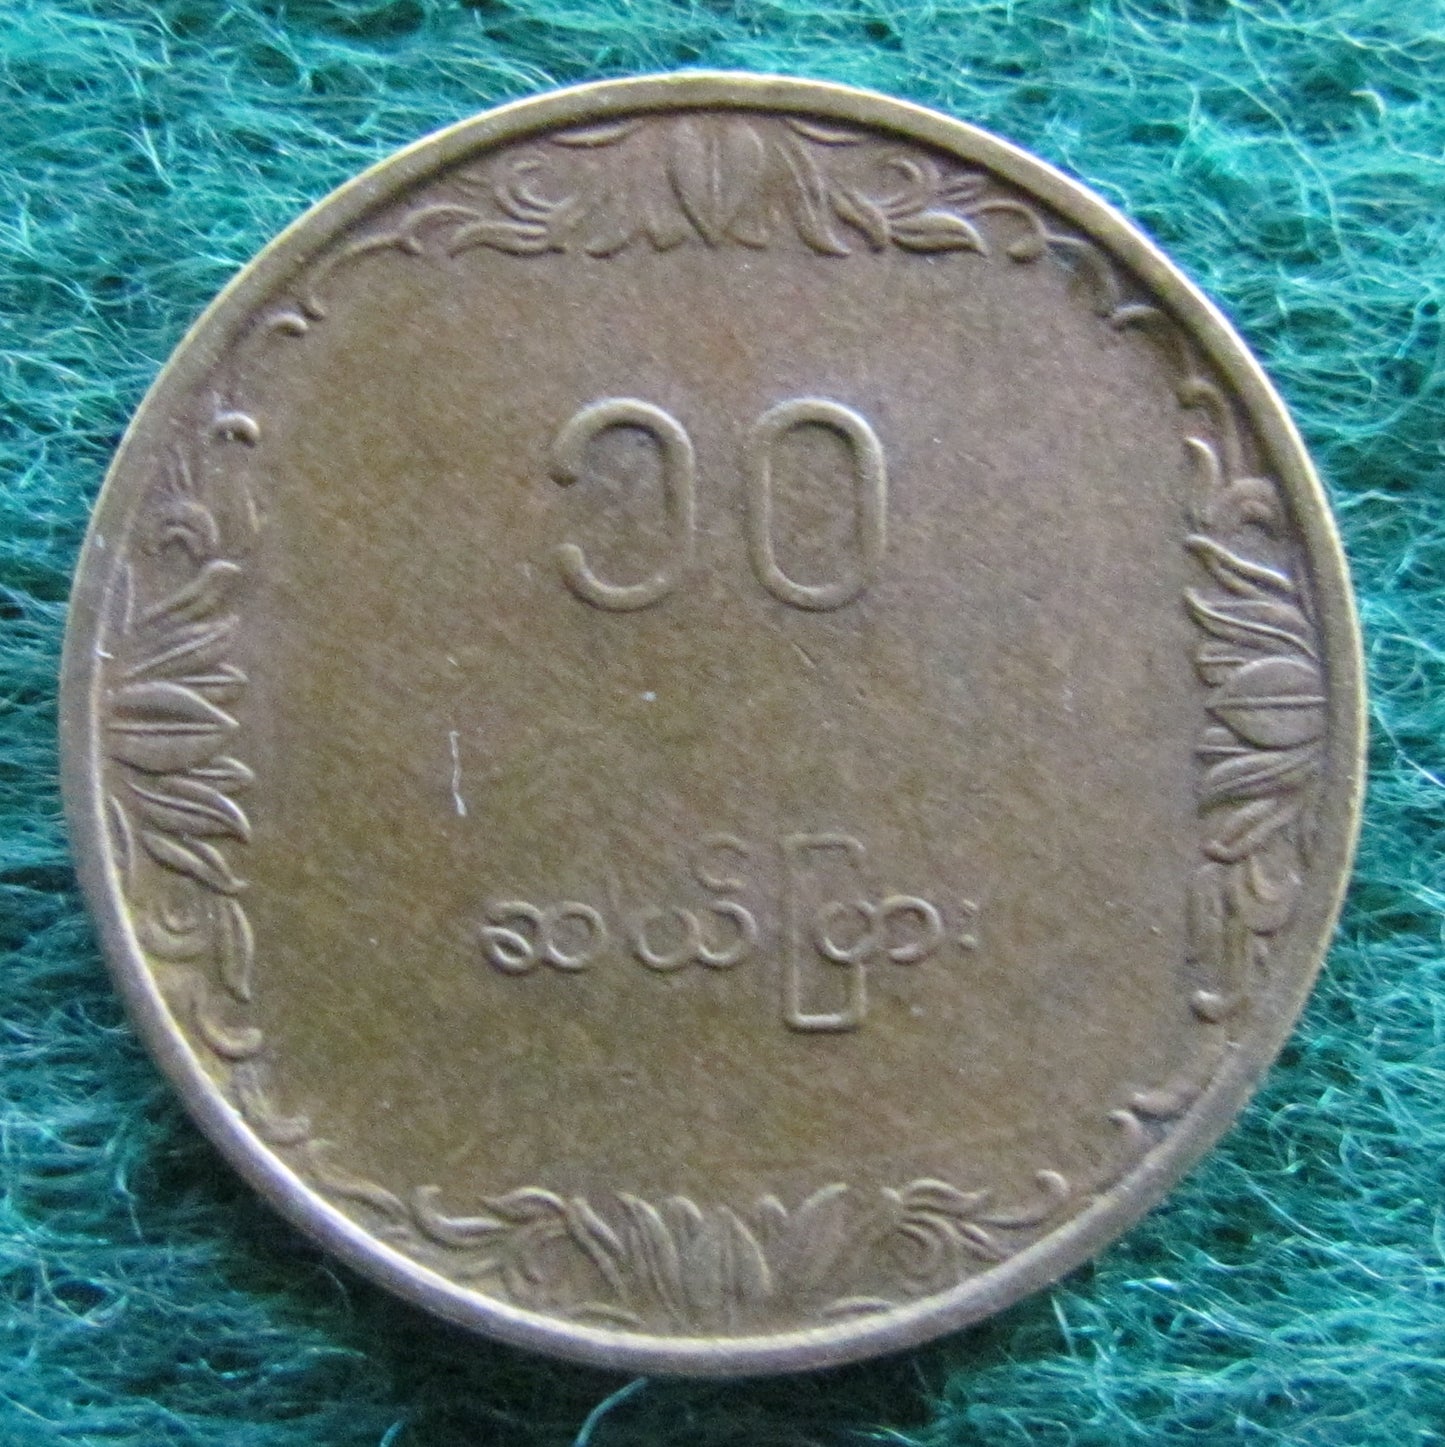 Burma 1983 10 Pyas Coin - Circulated